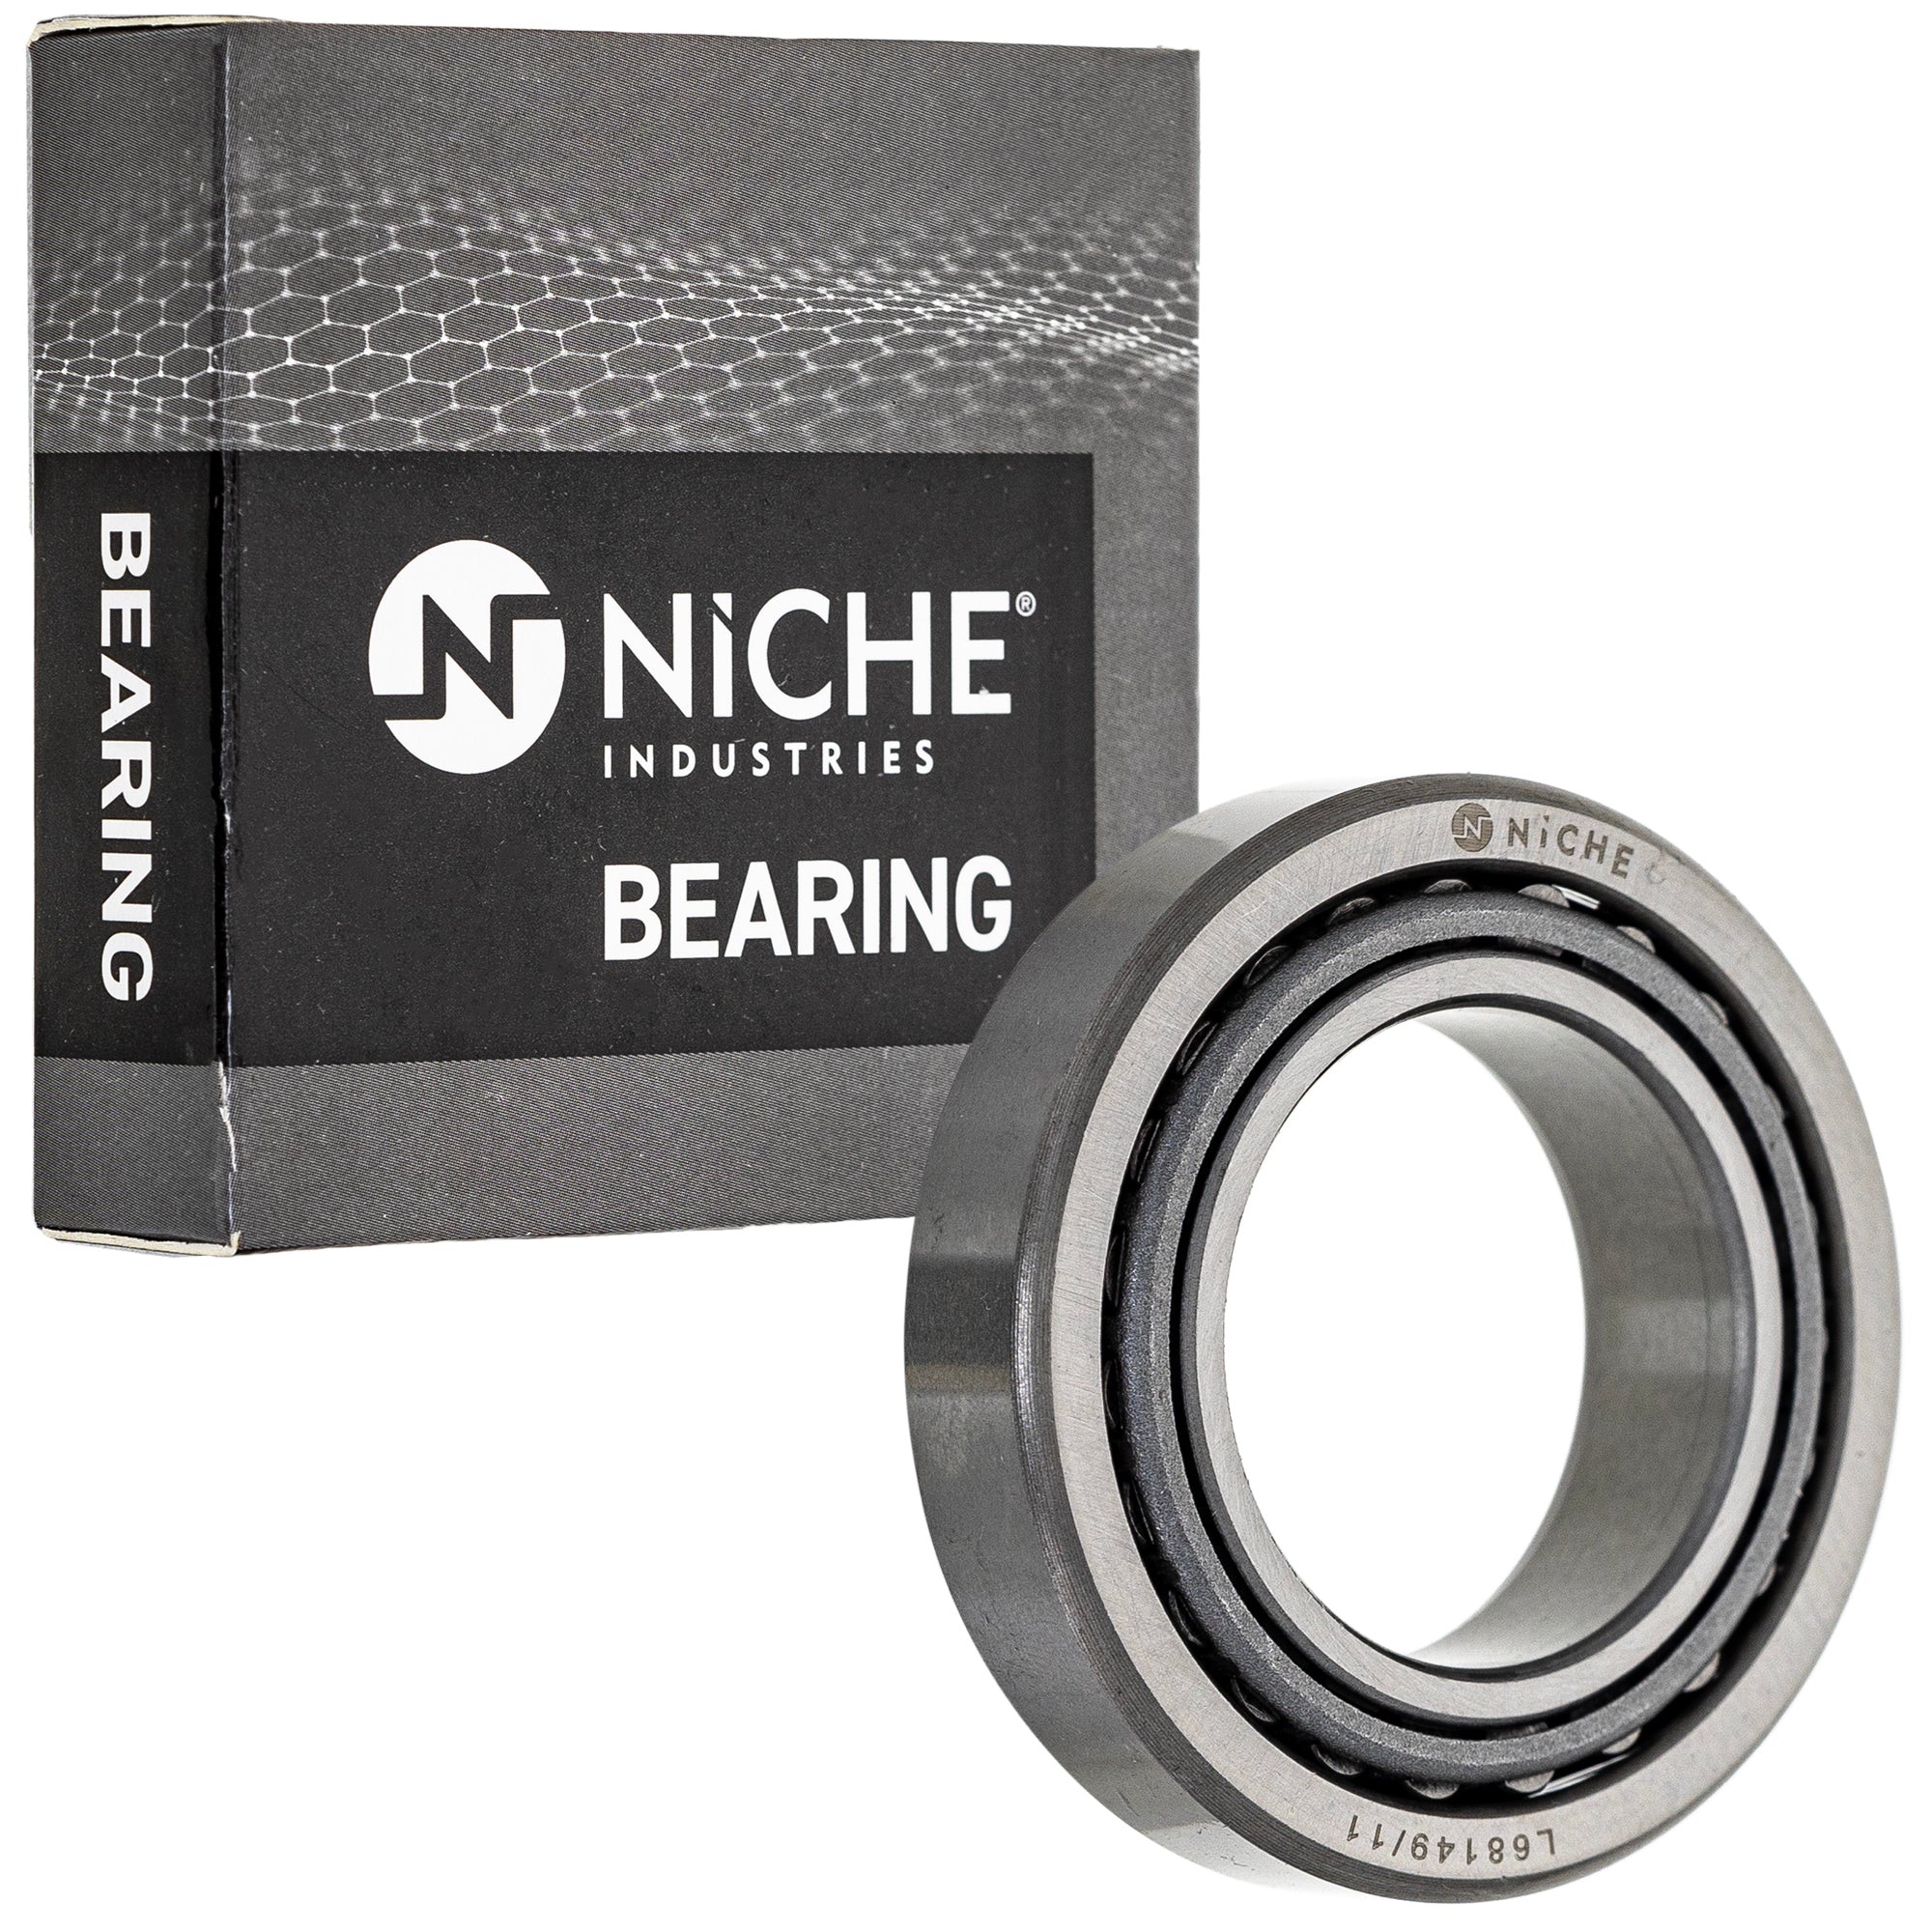 NICHE 519-CBB2285R Bearing 10-Pack for zOTHER Xplorer Trail-Boss